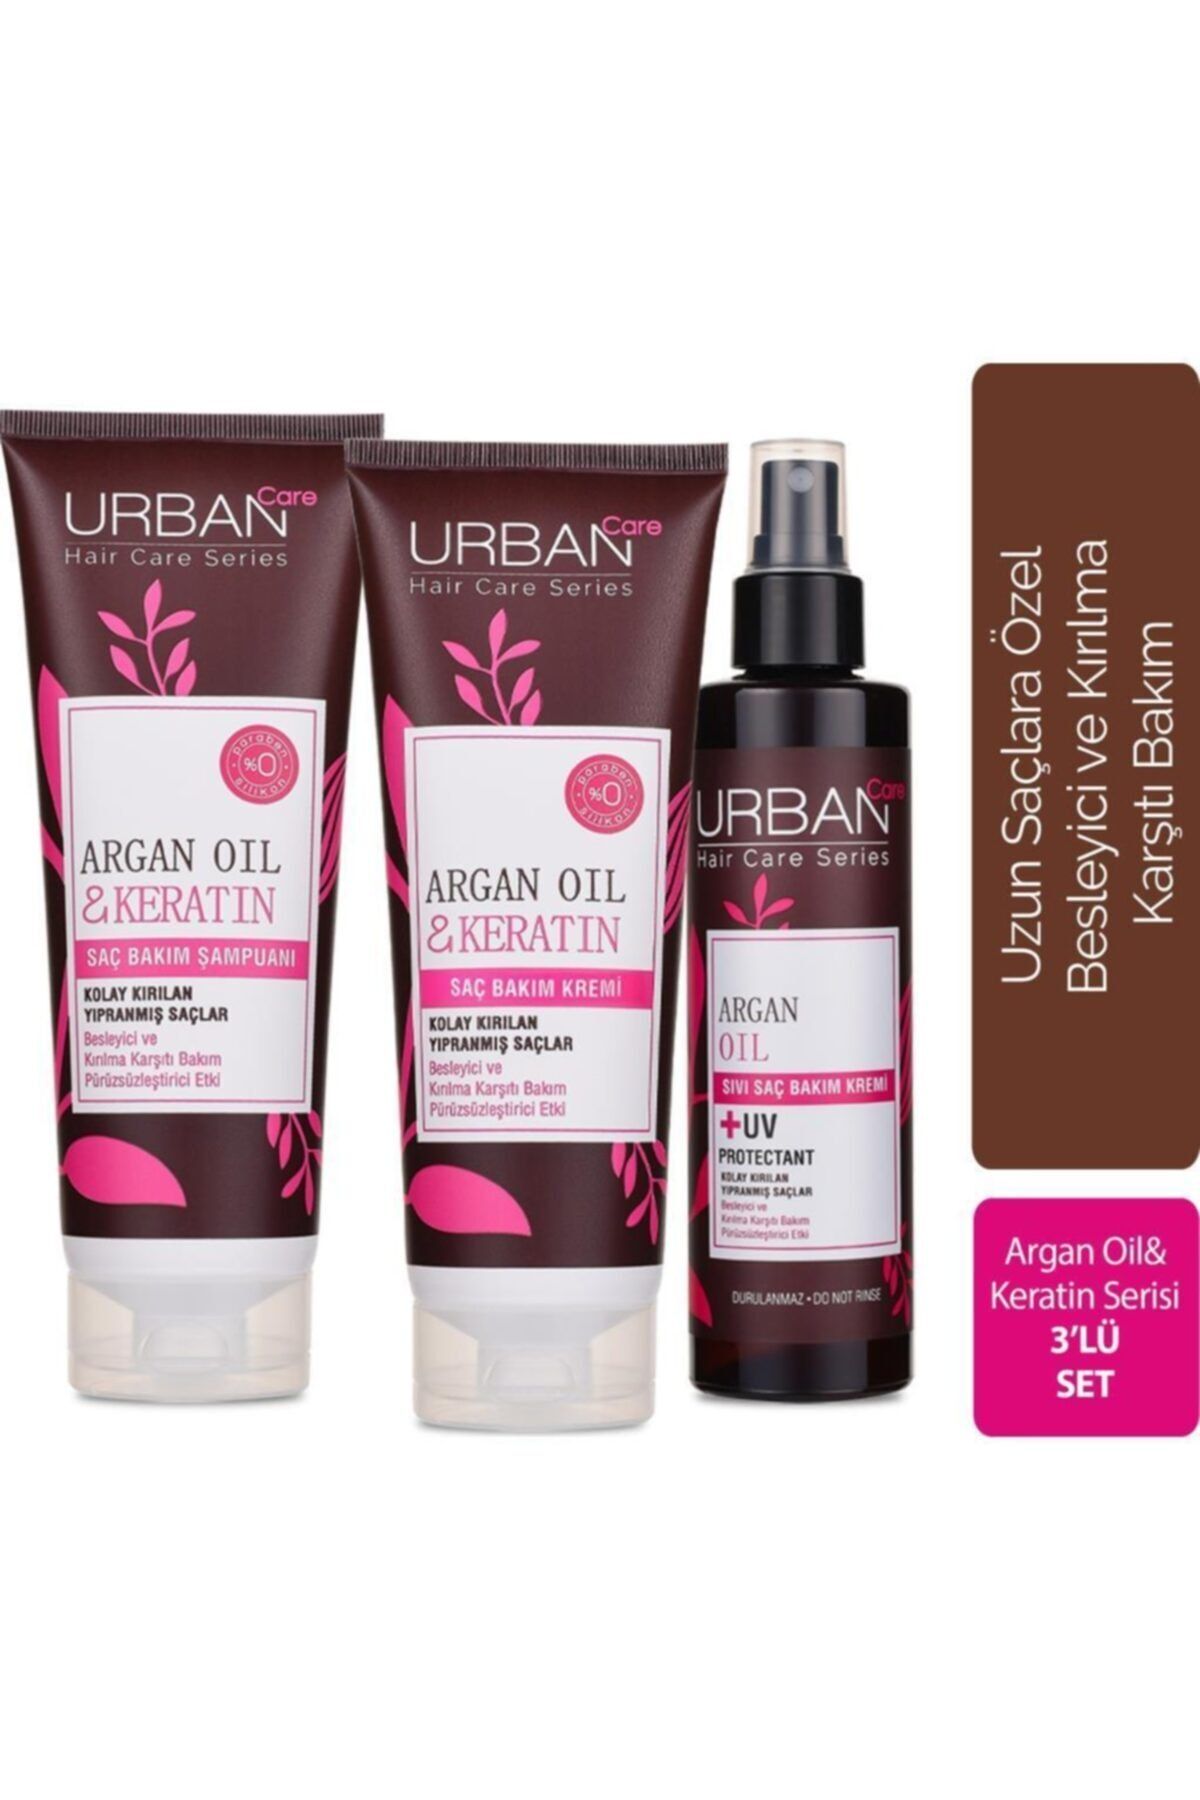 Urban Care Set Argan Oil 3lü Avantajlı Paket